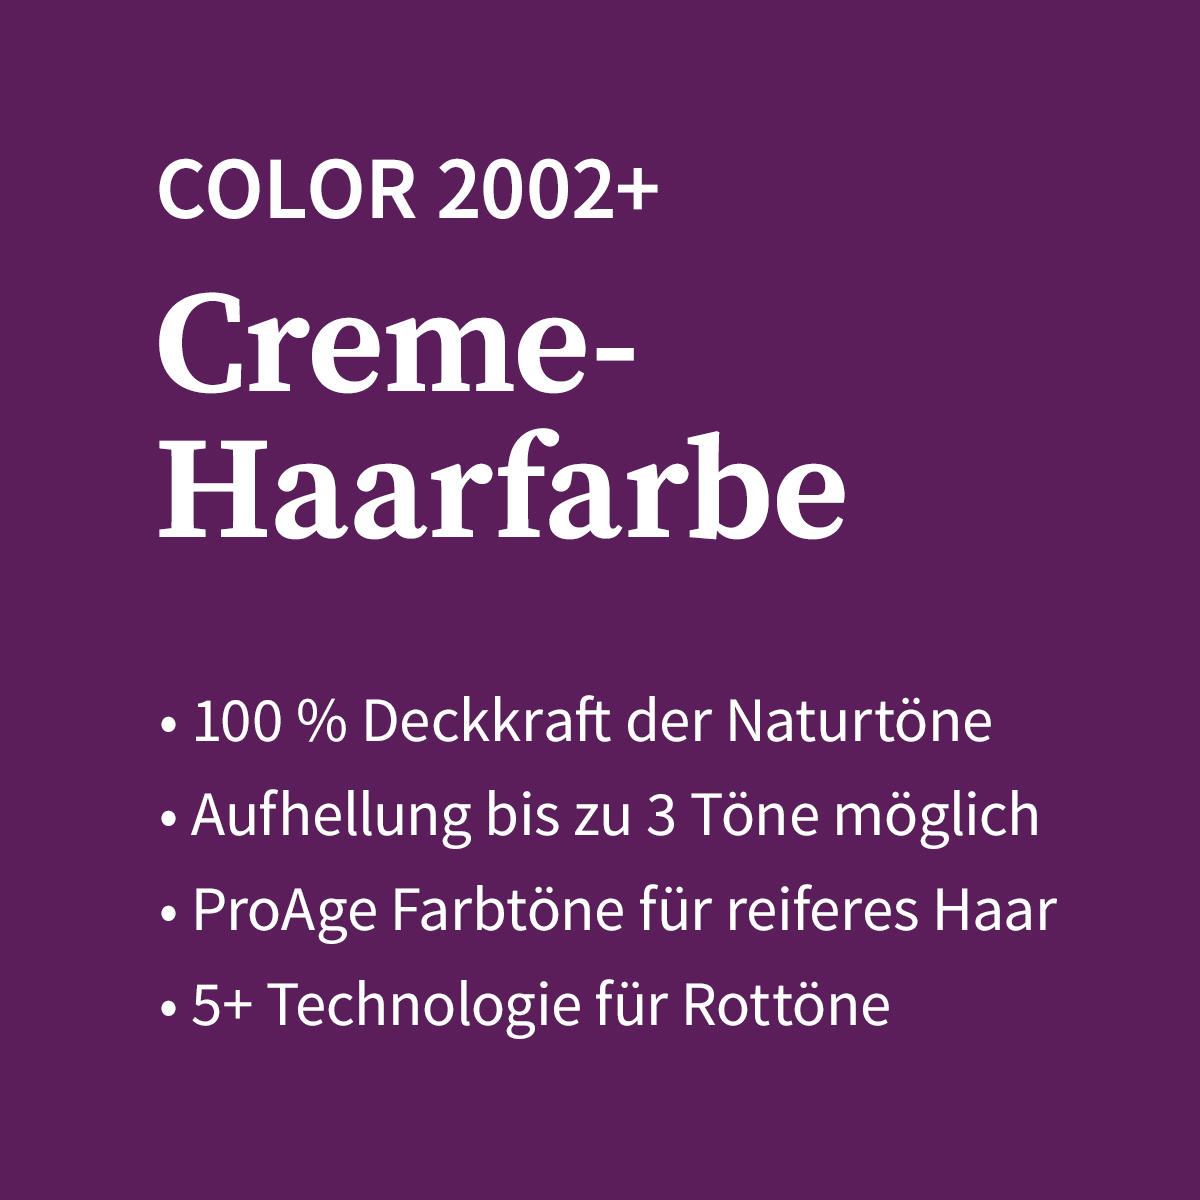 Basler Color 2002+ Cremehaarfarbe 5/43 hellbraun rot gold, Tube 60 ml - 4